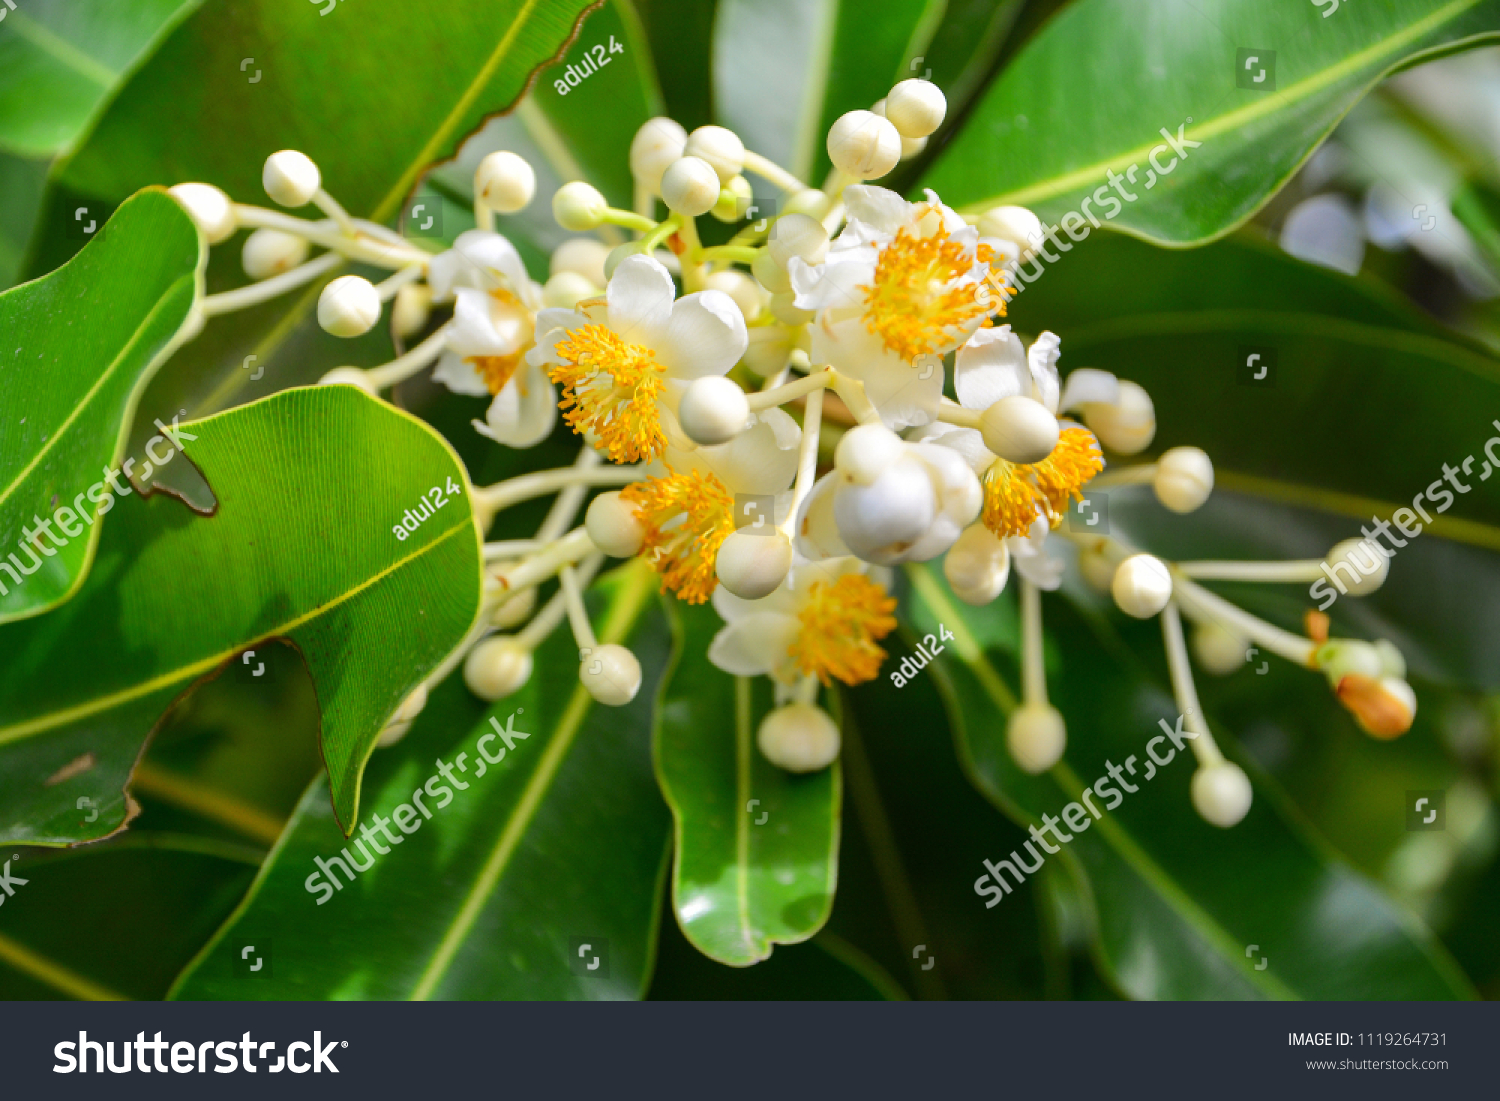 Alexandrian Laurel flower. (Calophyllum inophyllum) #1119264731